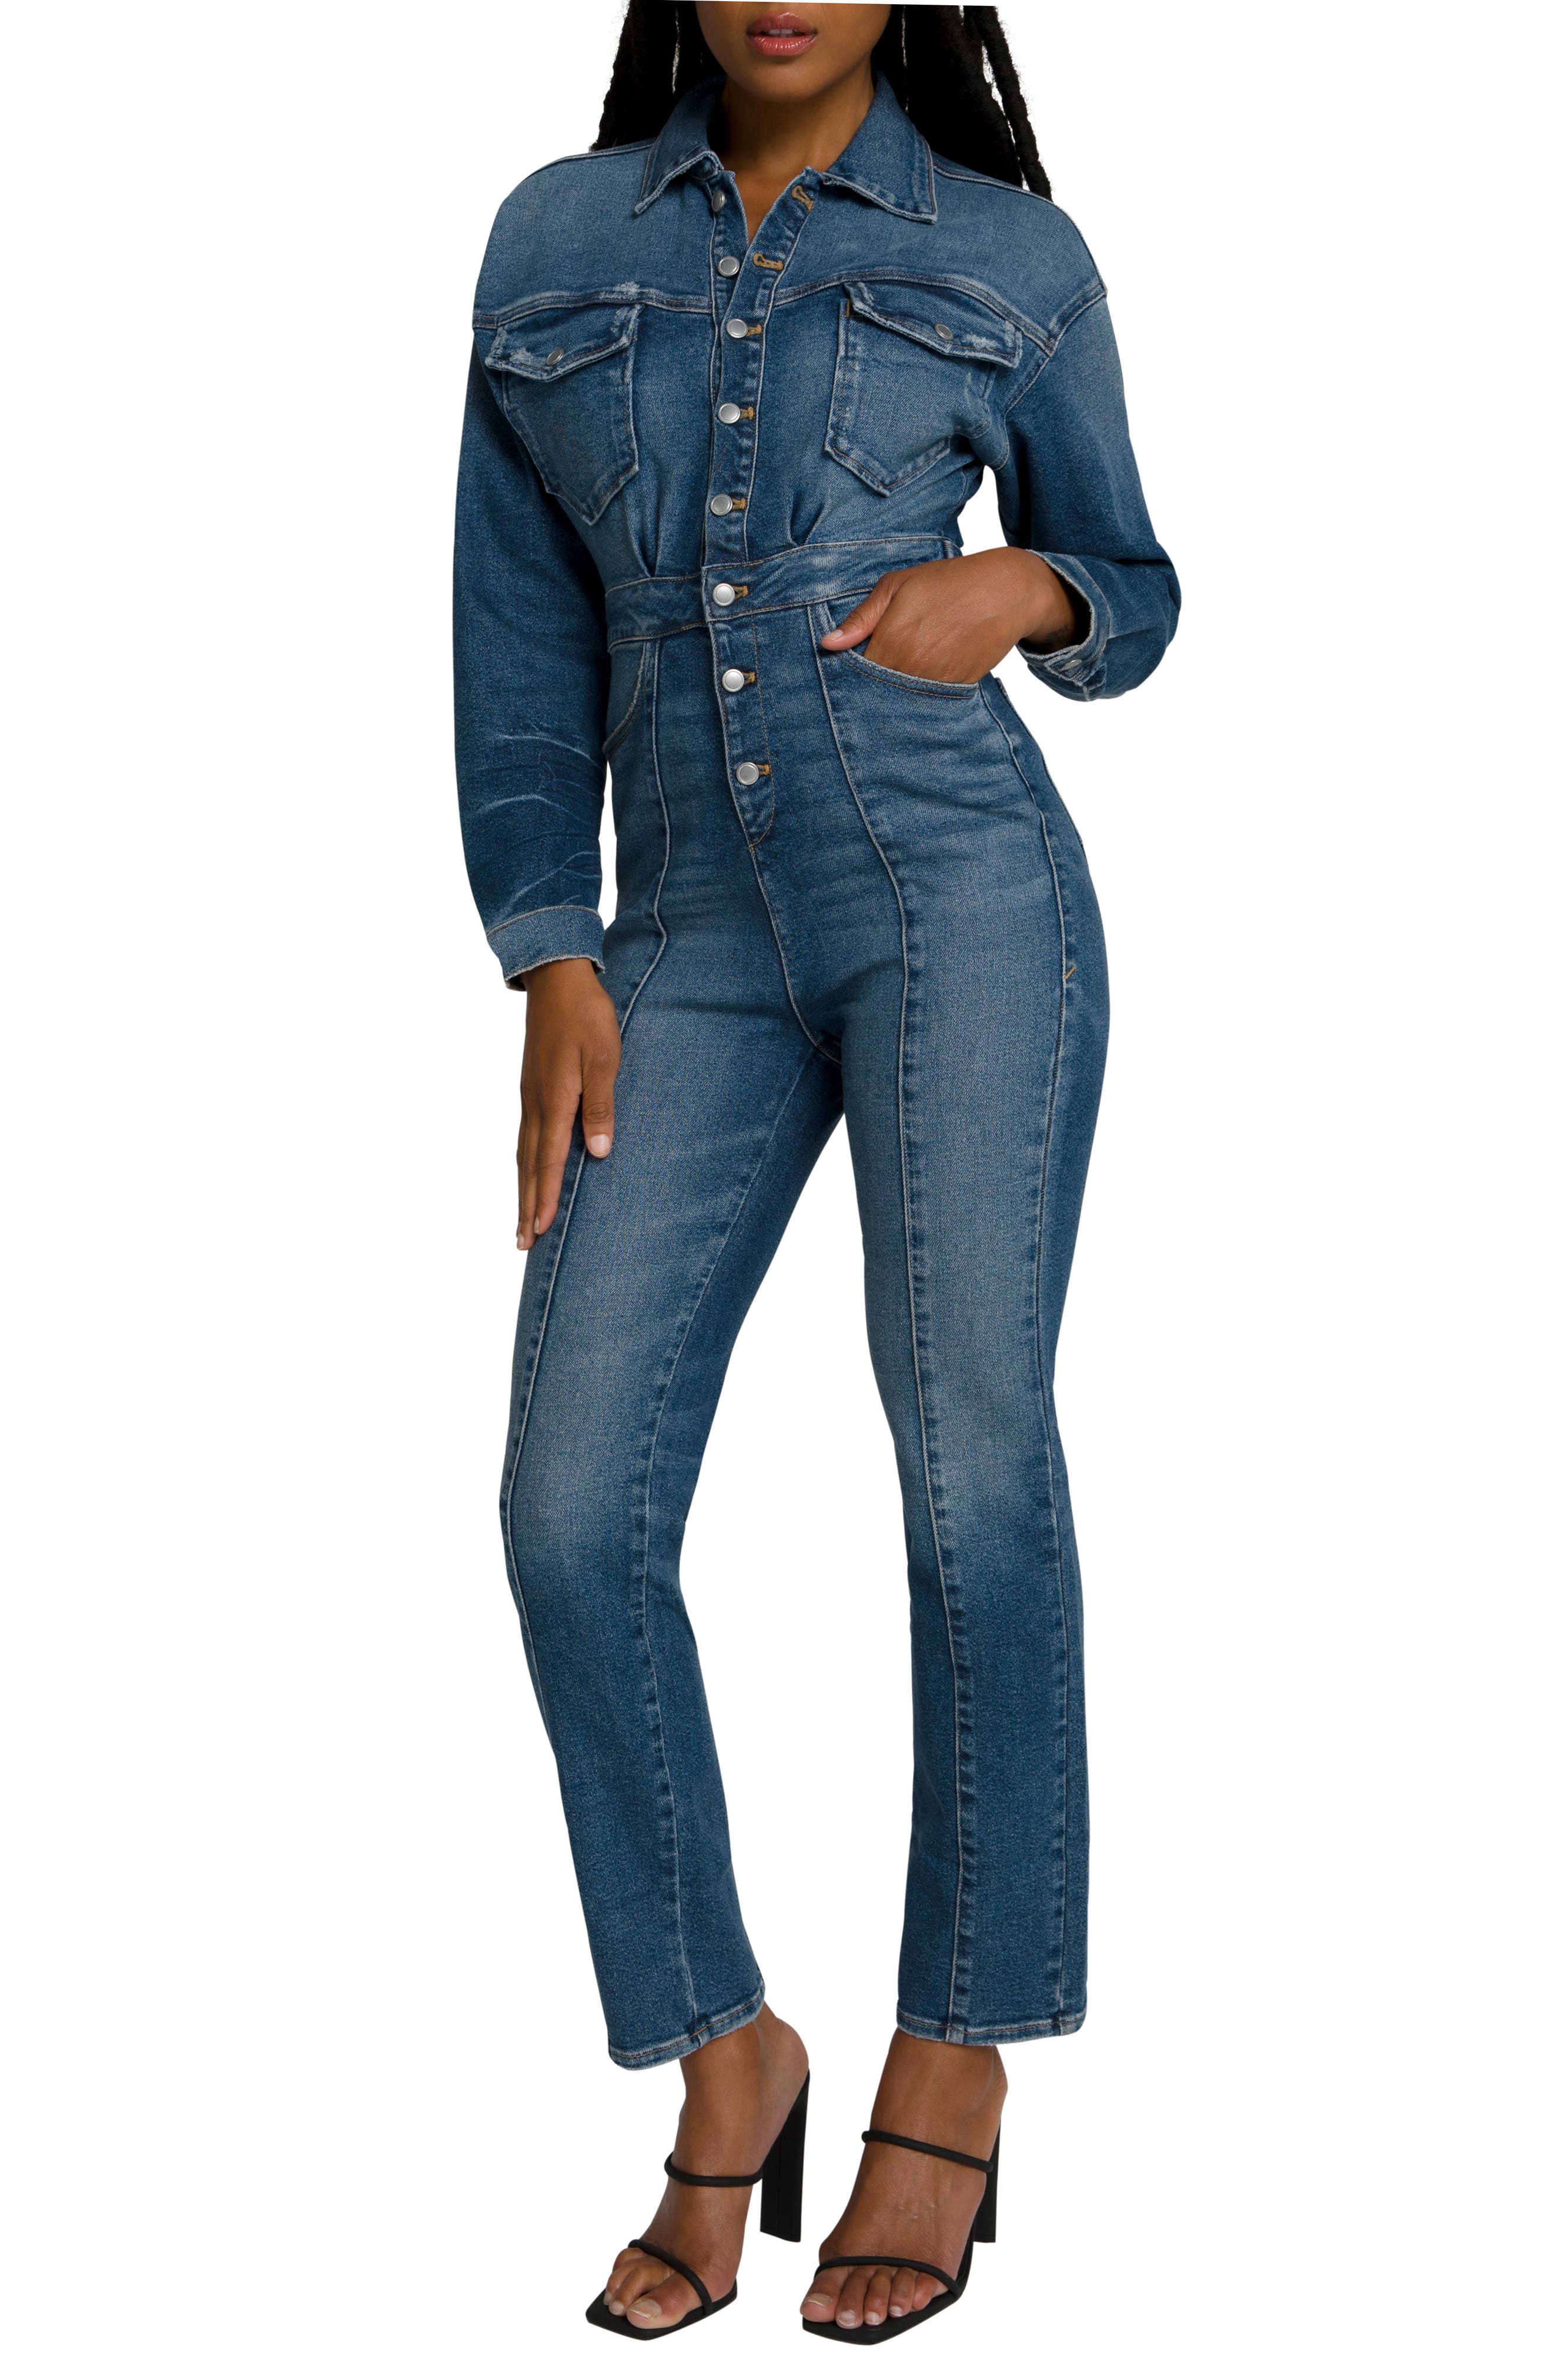 jeans jumpsuits for ladies